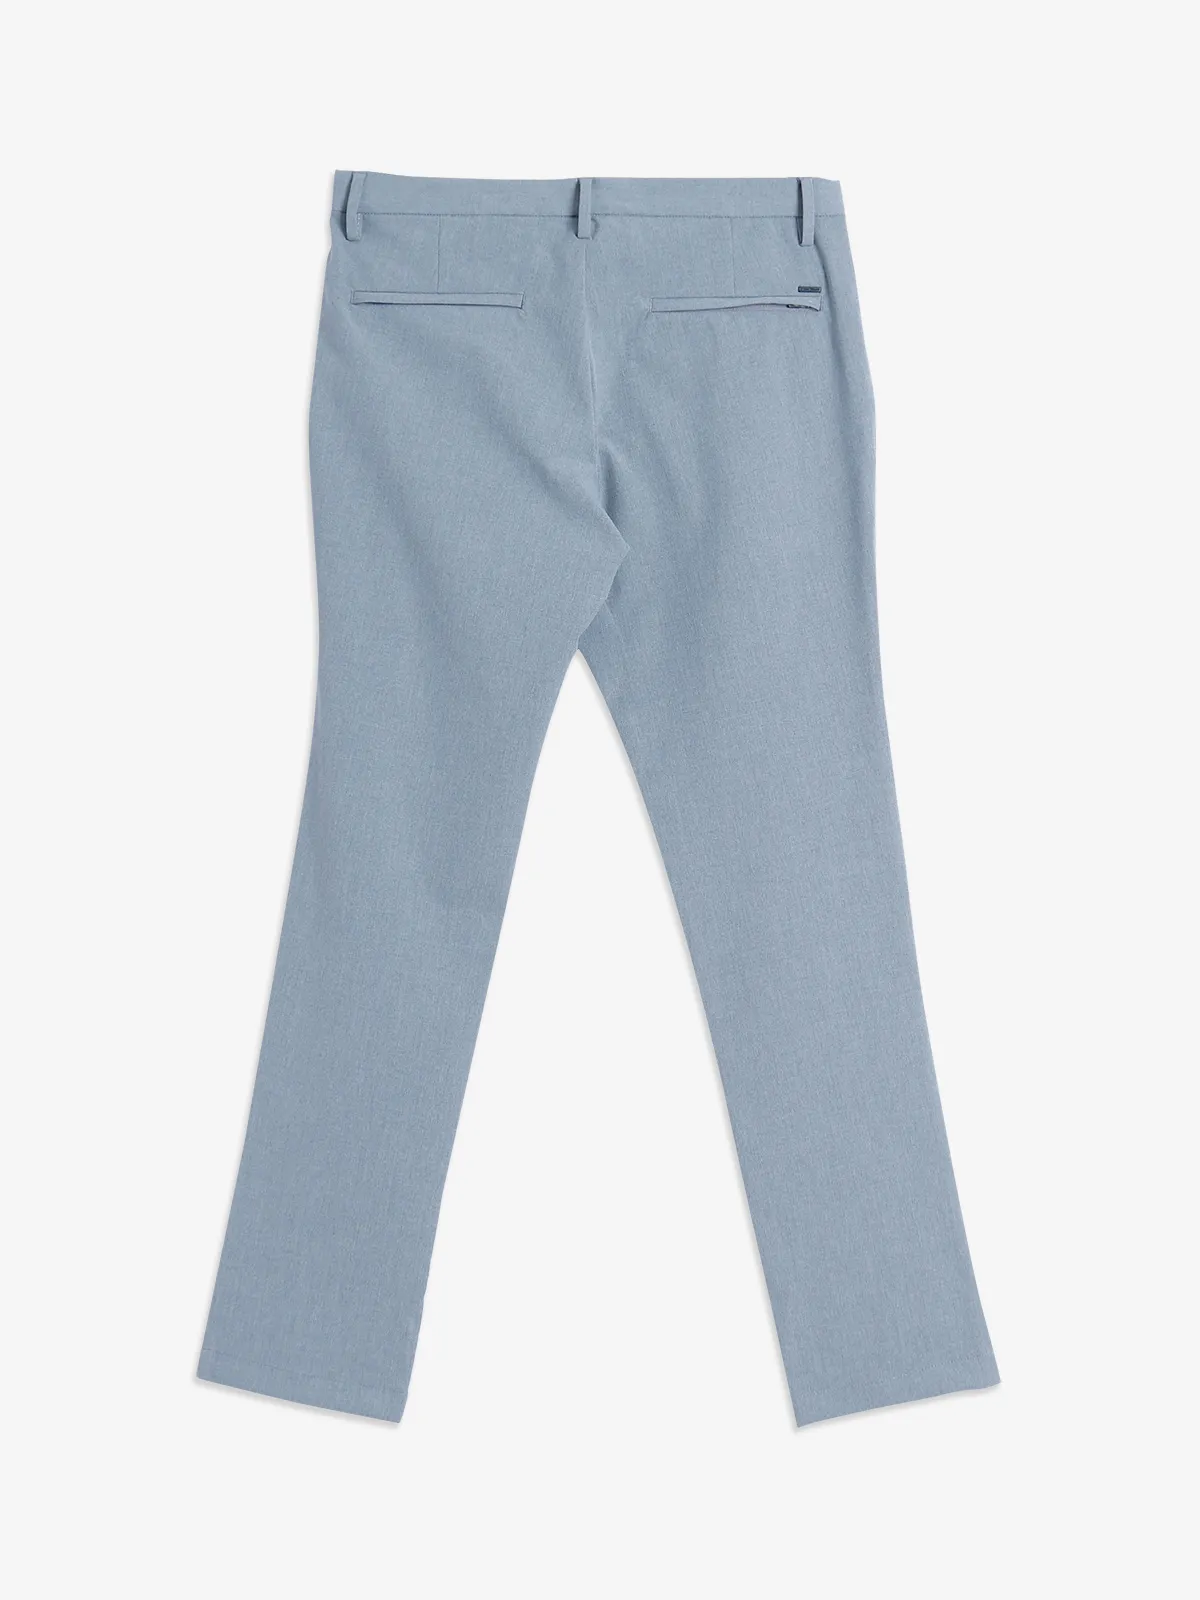 Indian Terrain grey urban fit cotton trouser